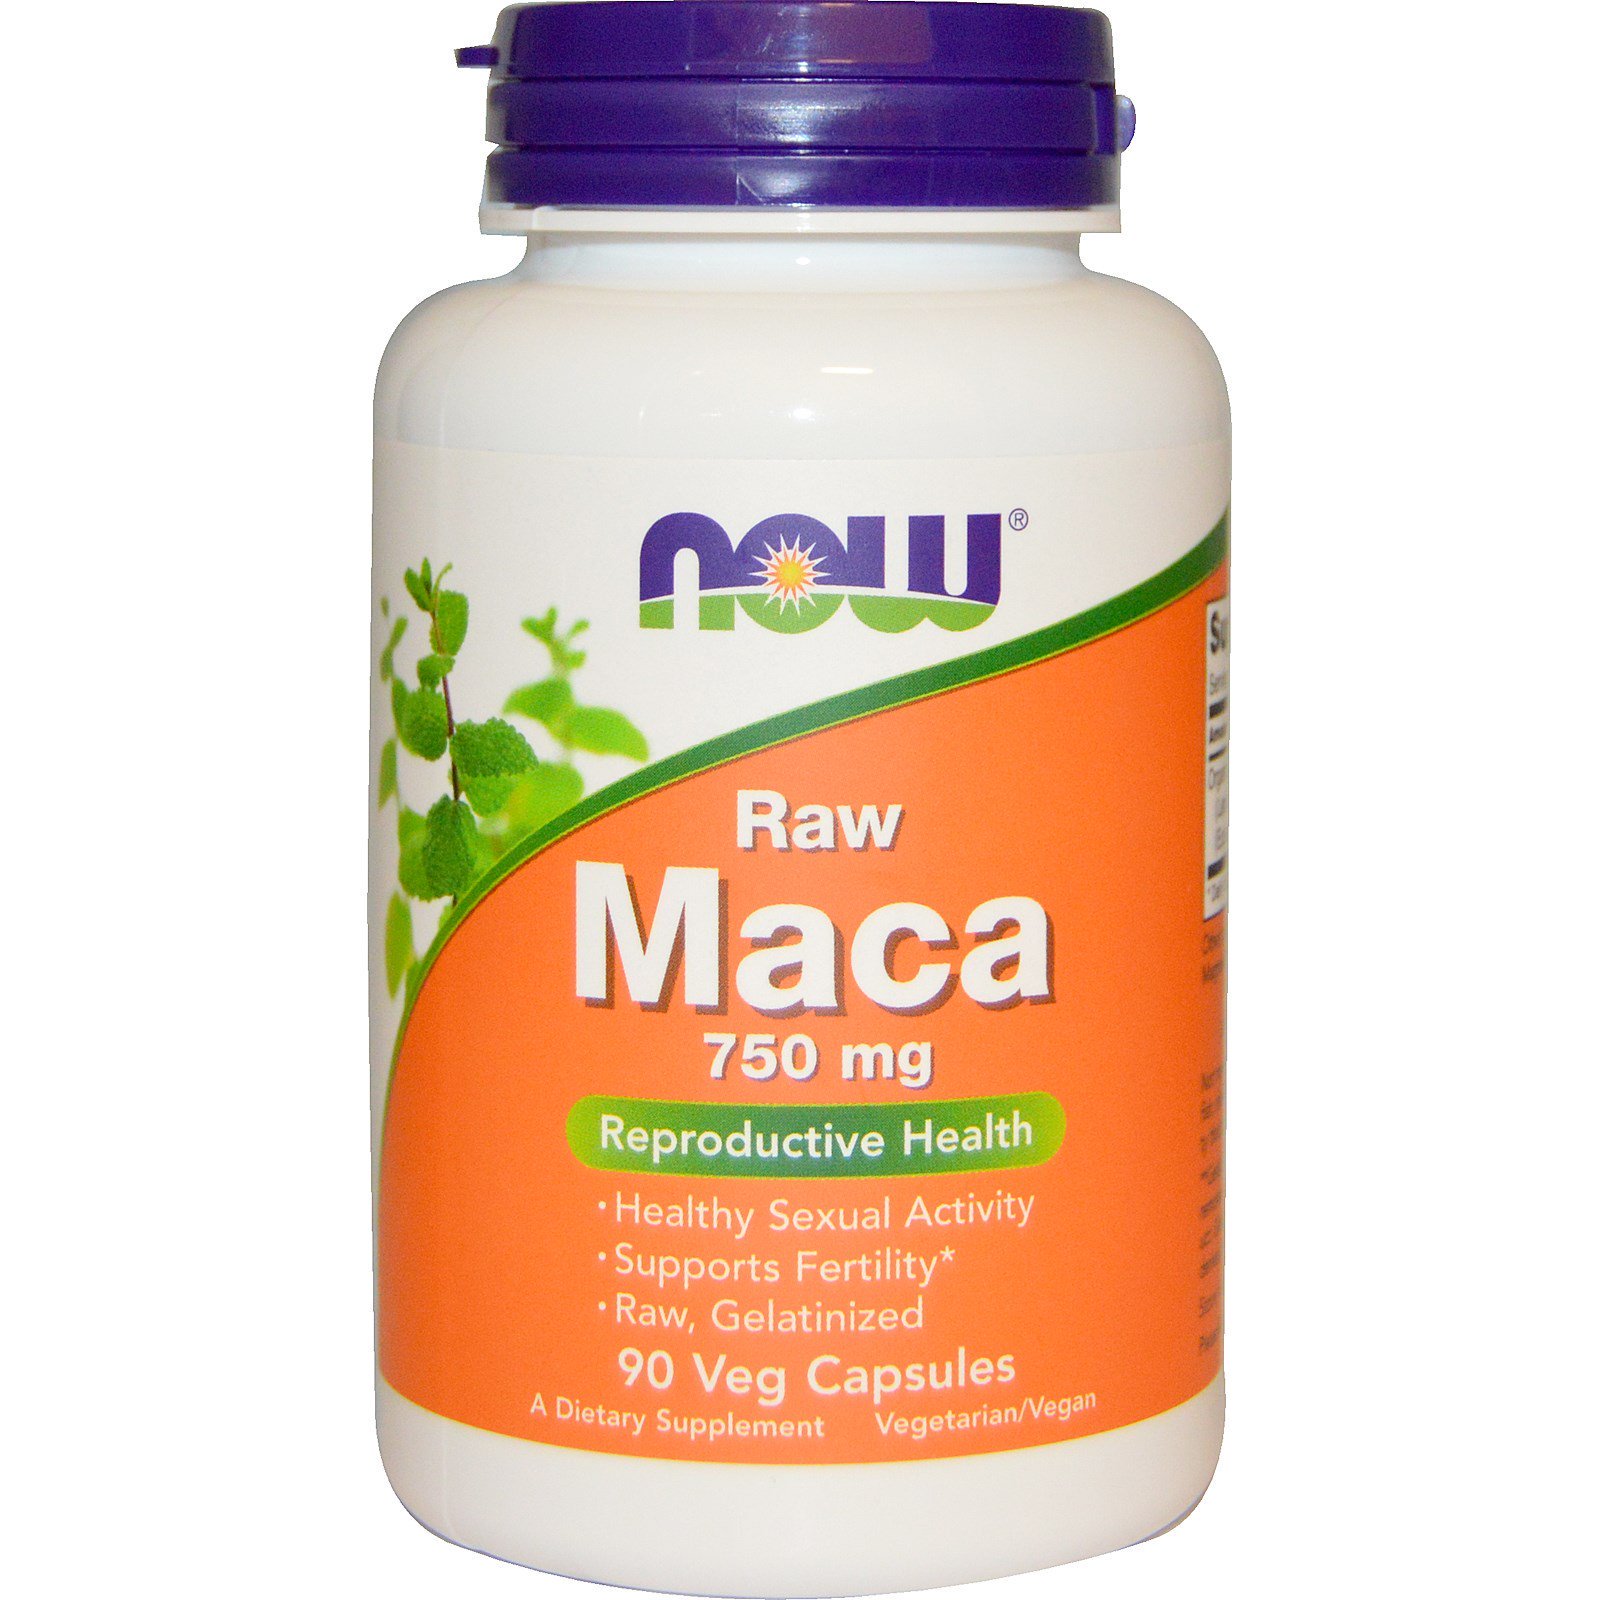 NOW Maca, Мака Перуанская 750 мг - 90 капсул